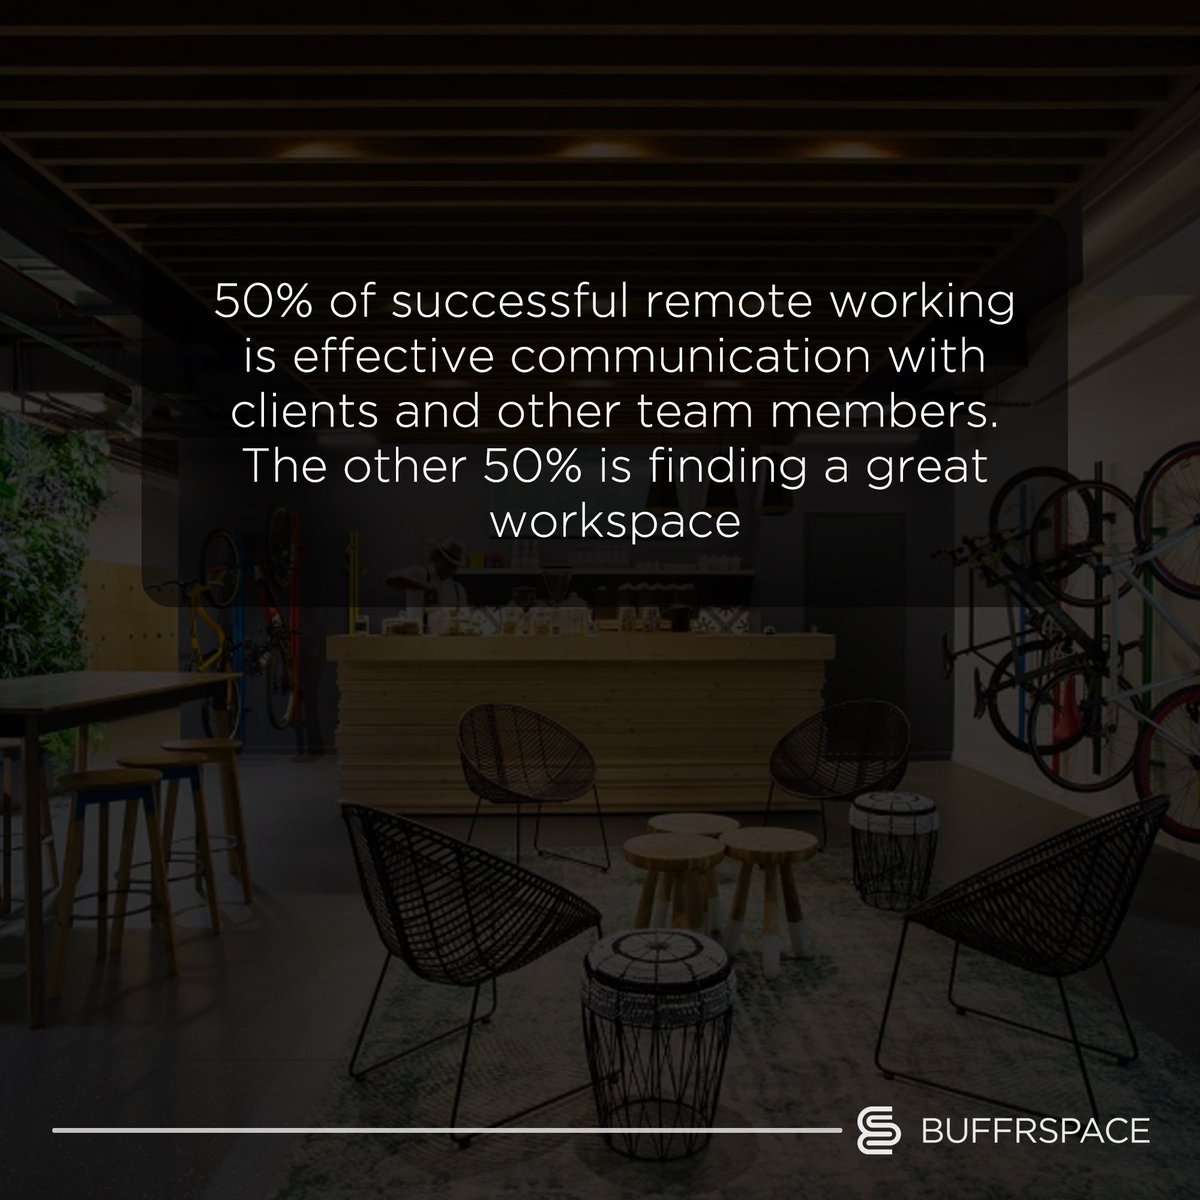 #RemoteWorkingTips #Buffrspace #Productivity twitter.com/BuffrSpace/sta…